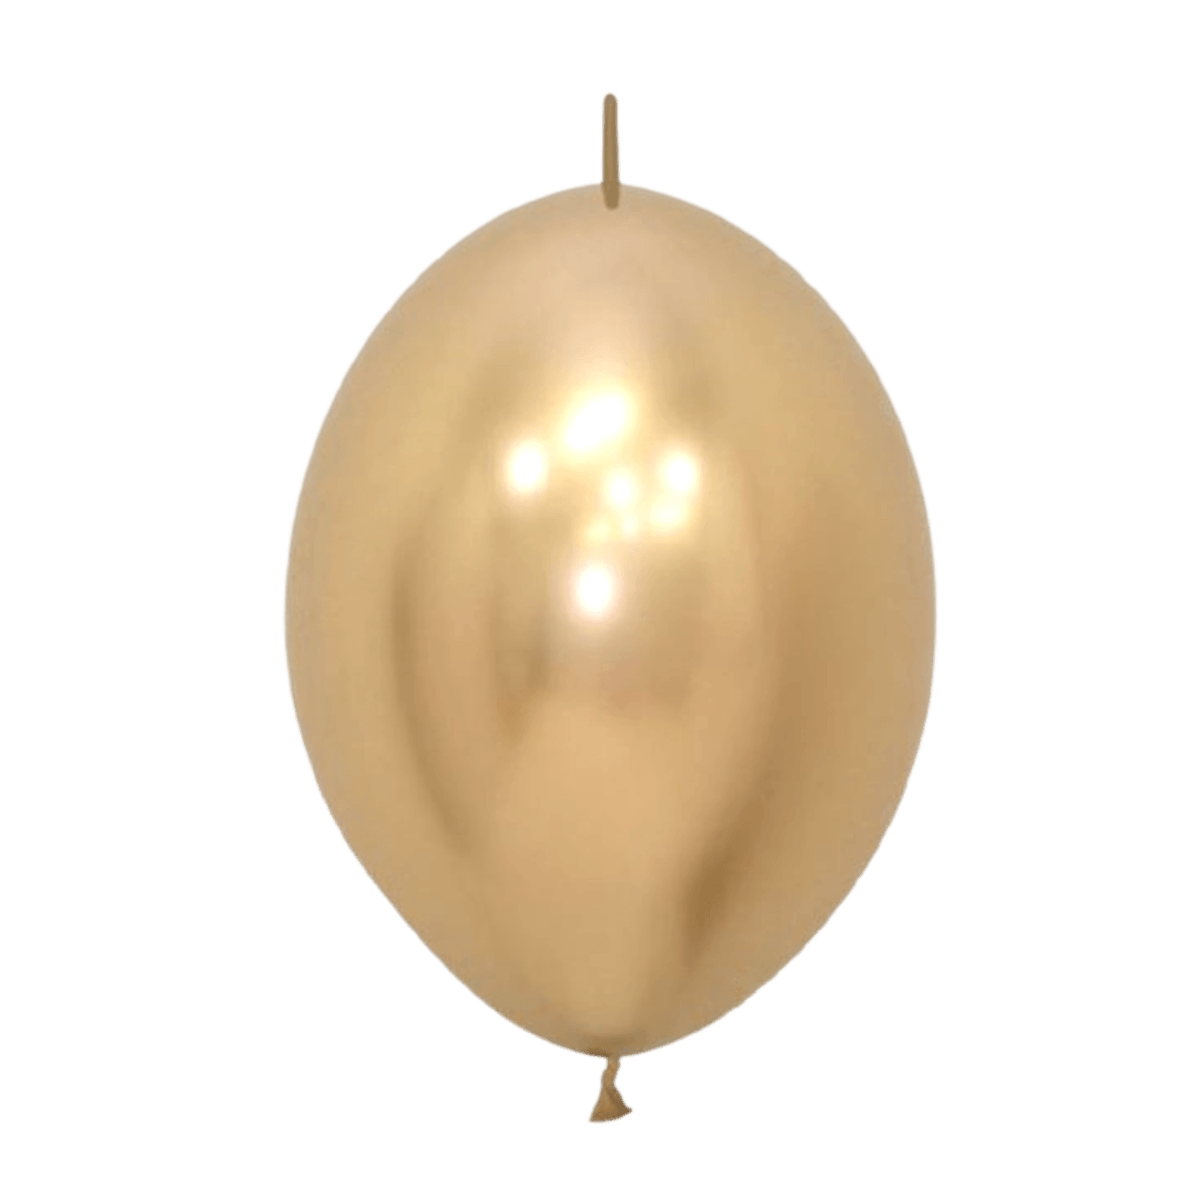 Sempertex-6吋12吋連結球 珍珠色 - MR.Balloon 氣球先生派對商城